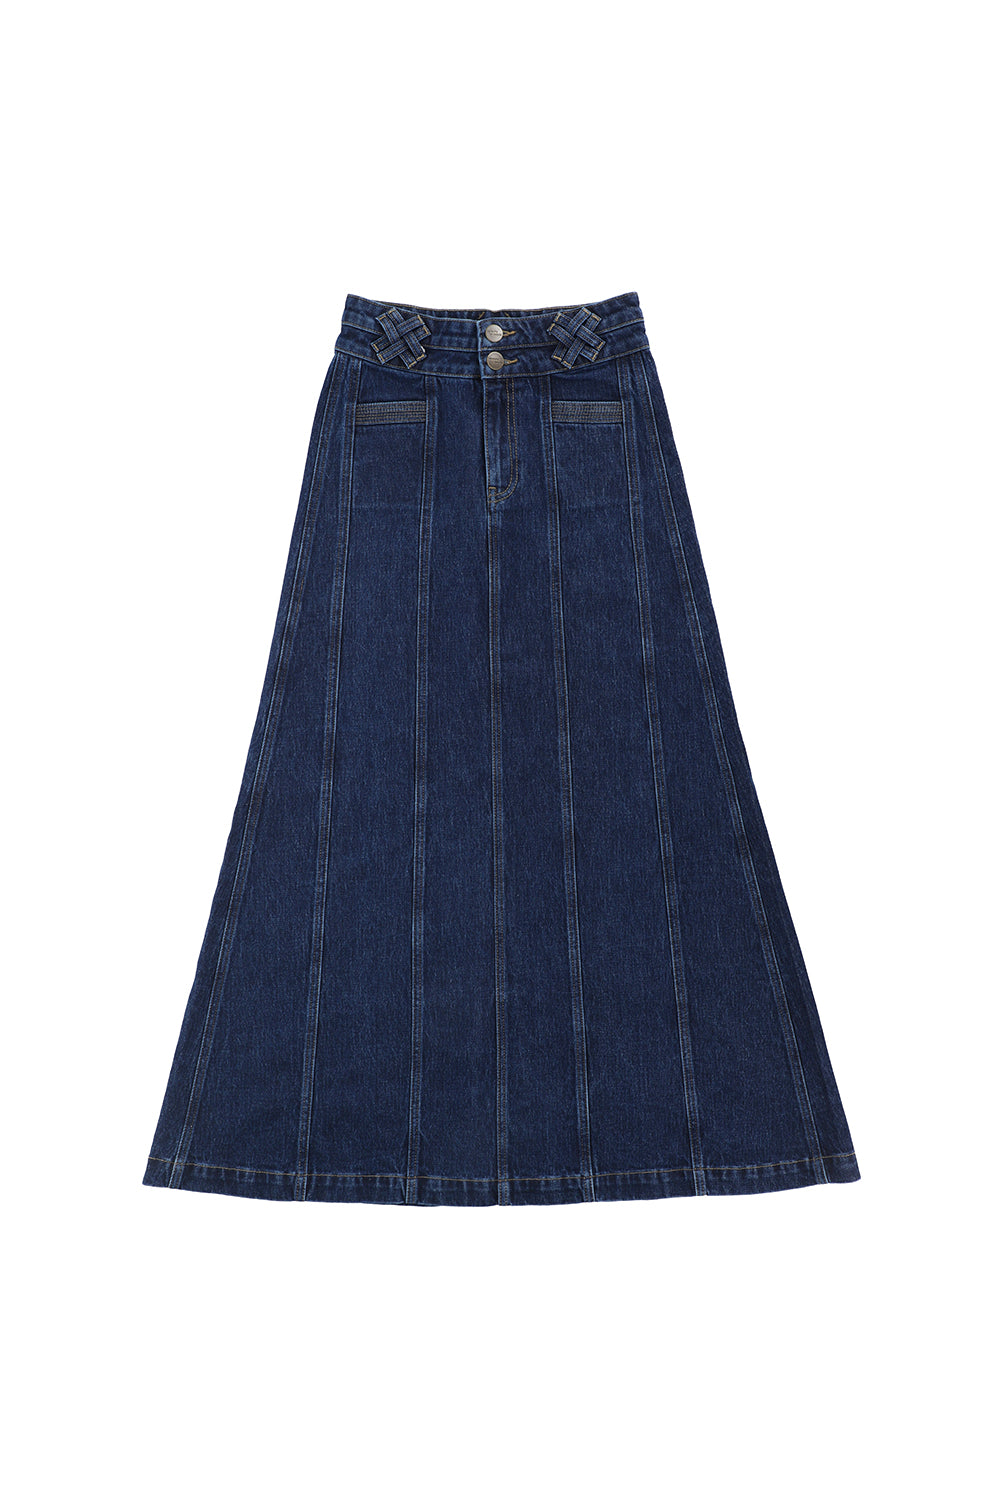 Willow Skirt in Americana - seventy + mochi